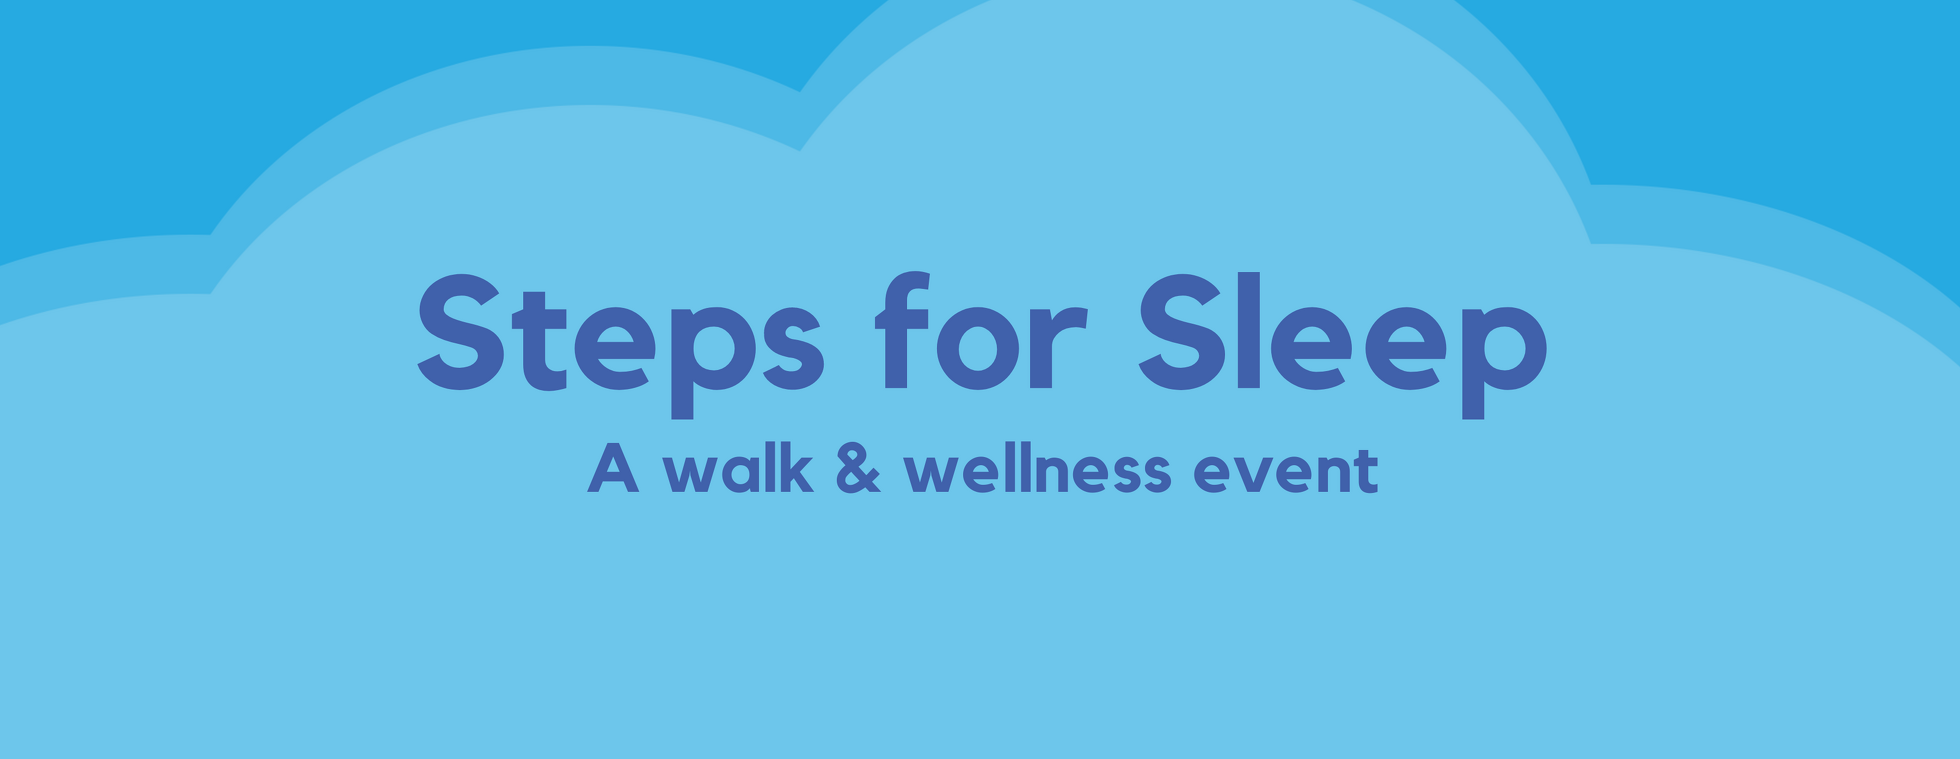 Steps for Sleep